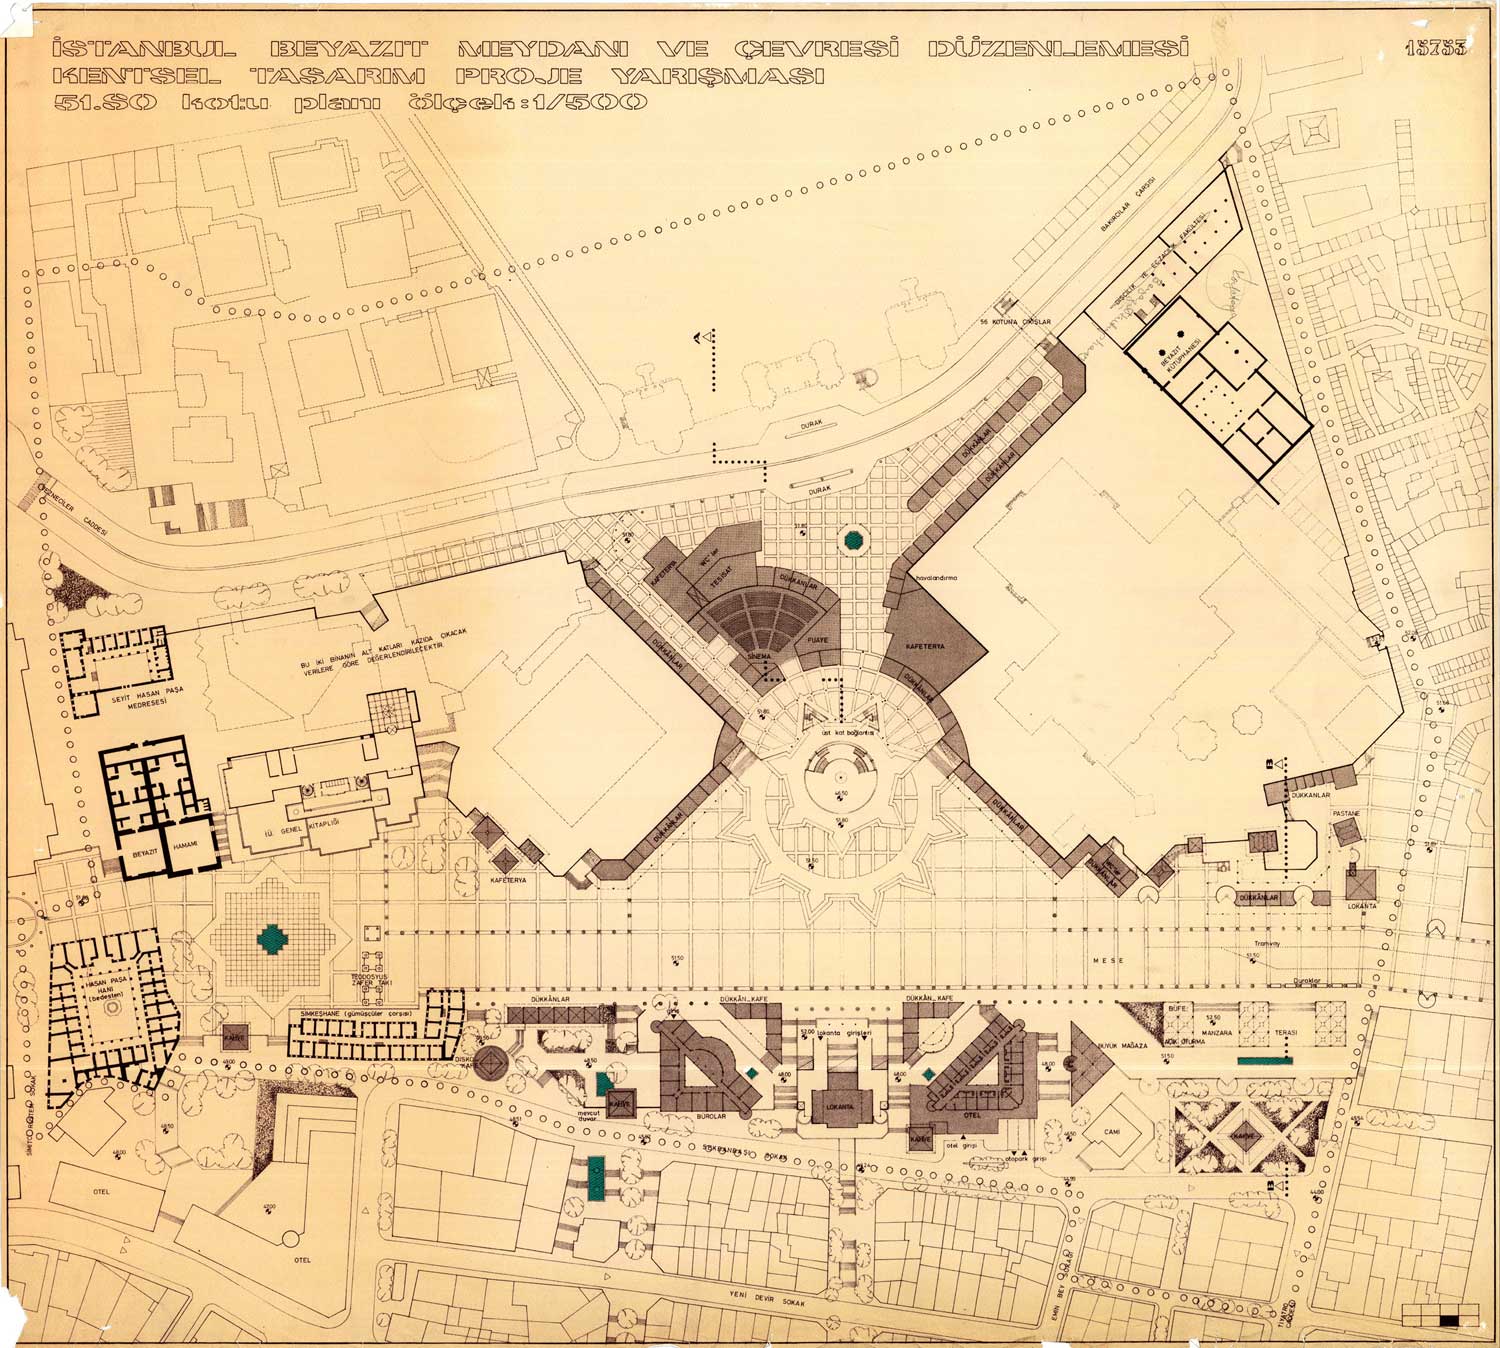 Beyazit Square, Urban Design Competition 1987. Grounds plan, by Fatma Vedia Dökmeci and Yaprak Karlıdağ.